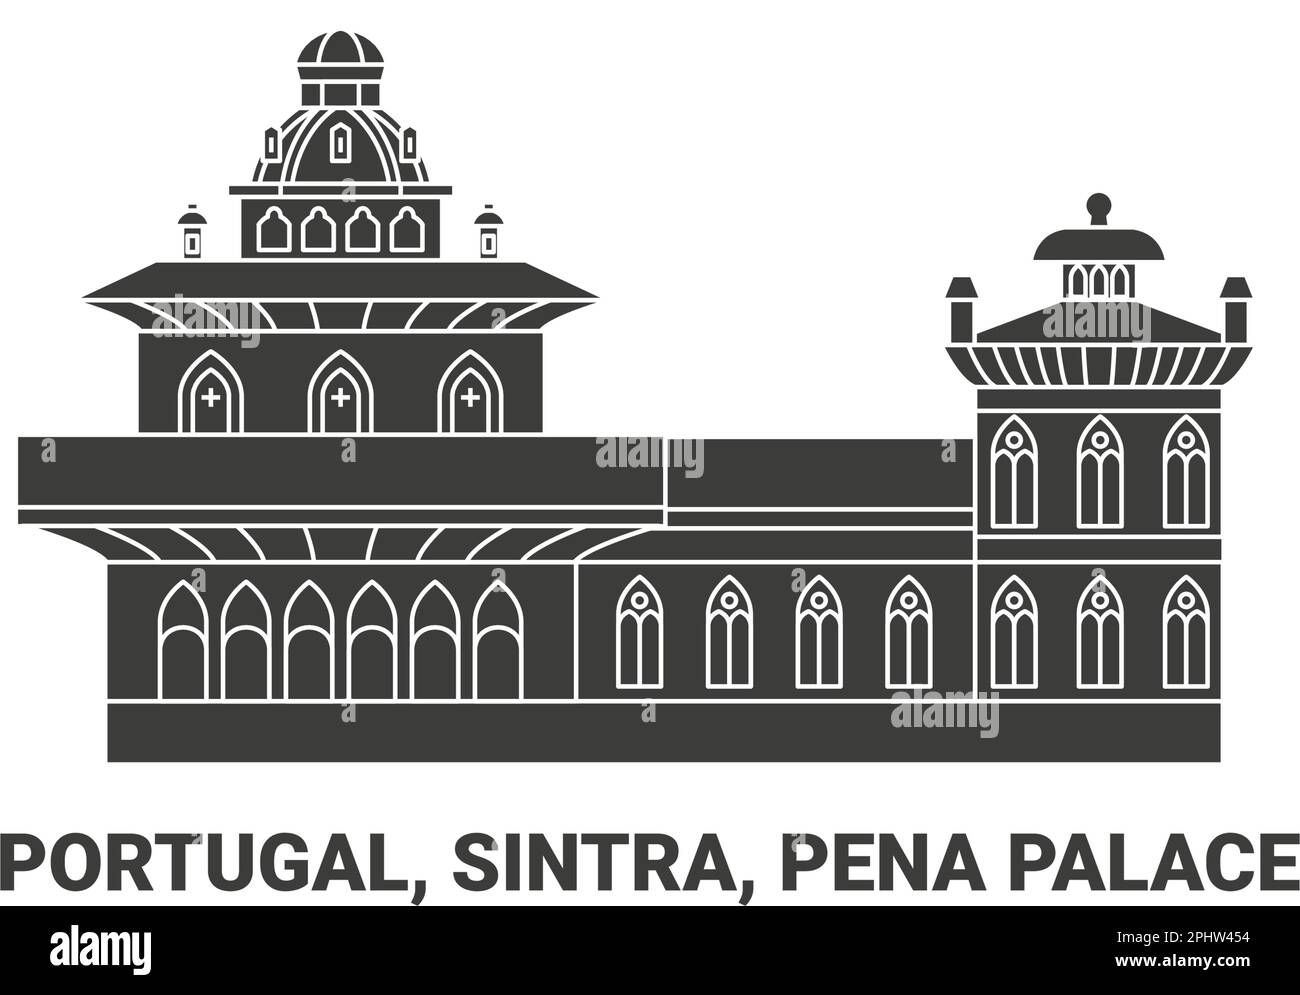 Portugal, Sintra, Pena Palace, travel landmark vector illustration Stock Vector